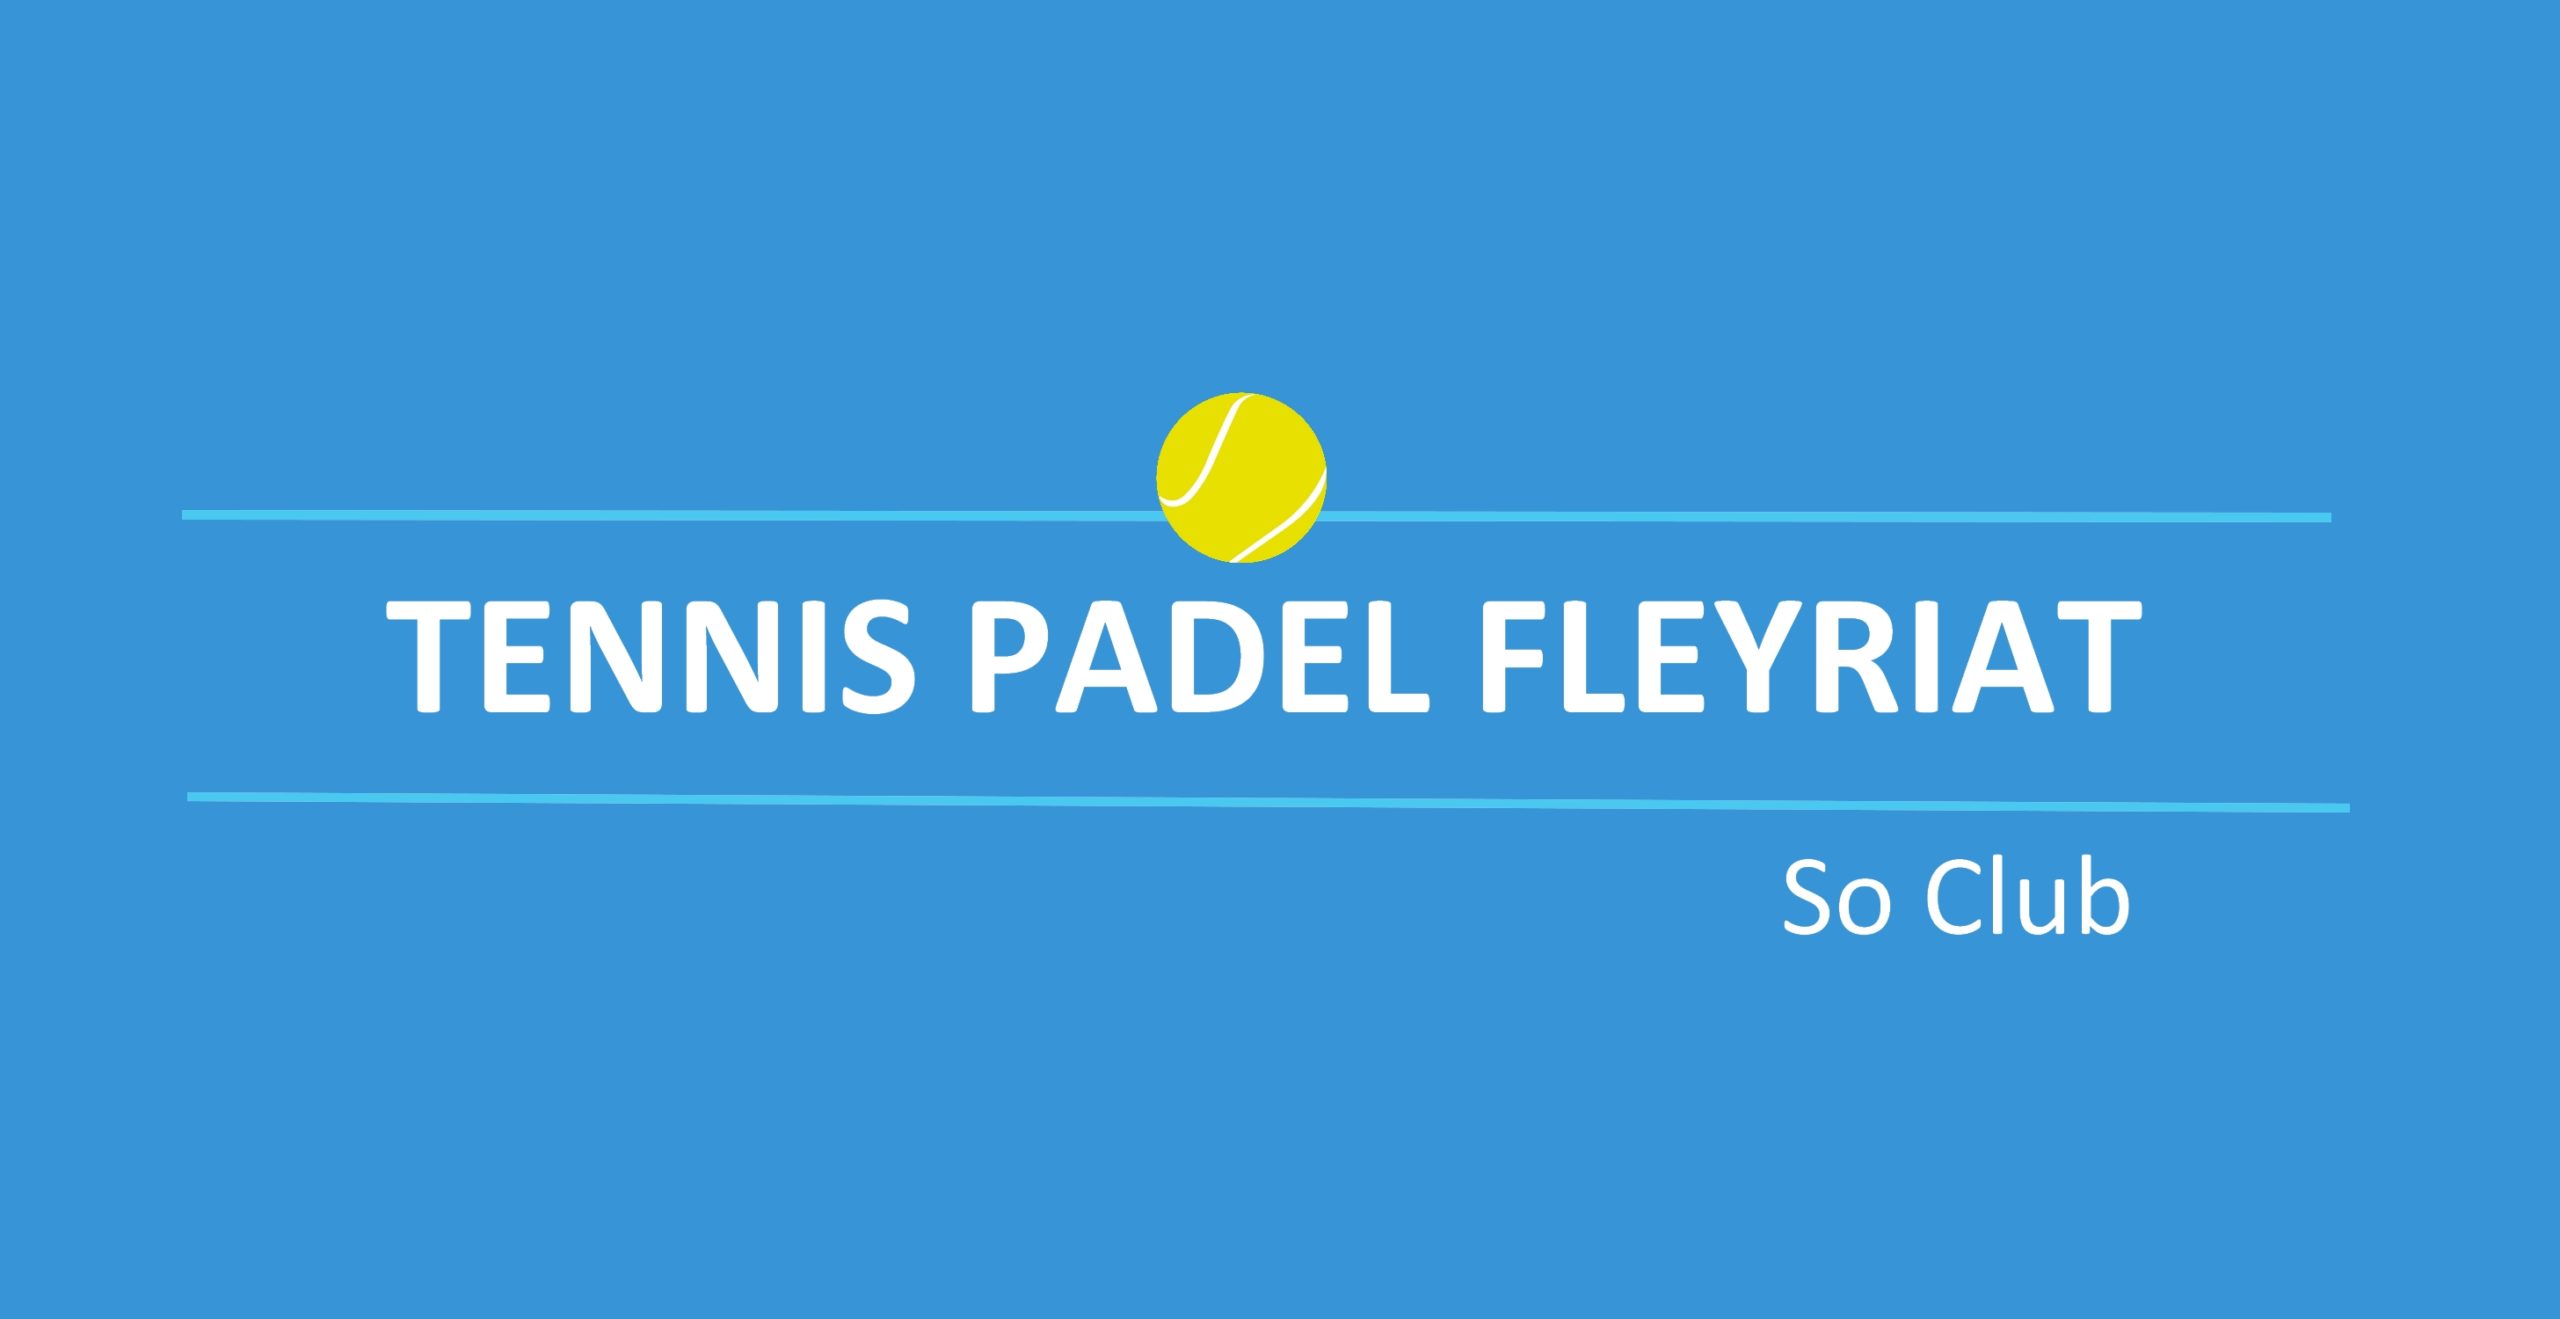 Tennis Squash Fleyriat